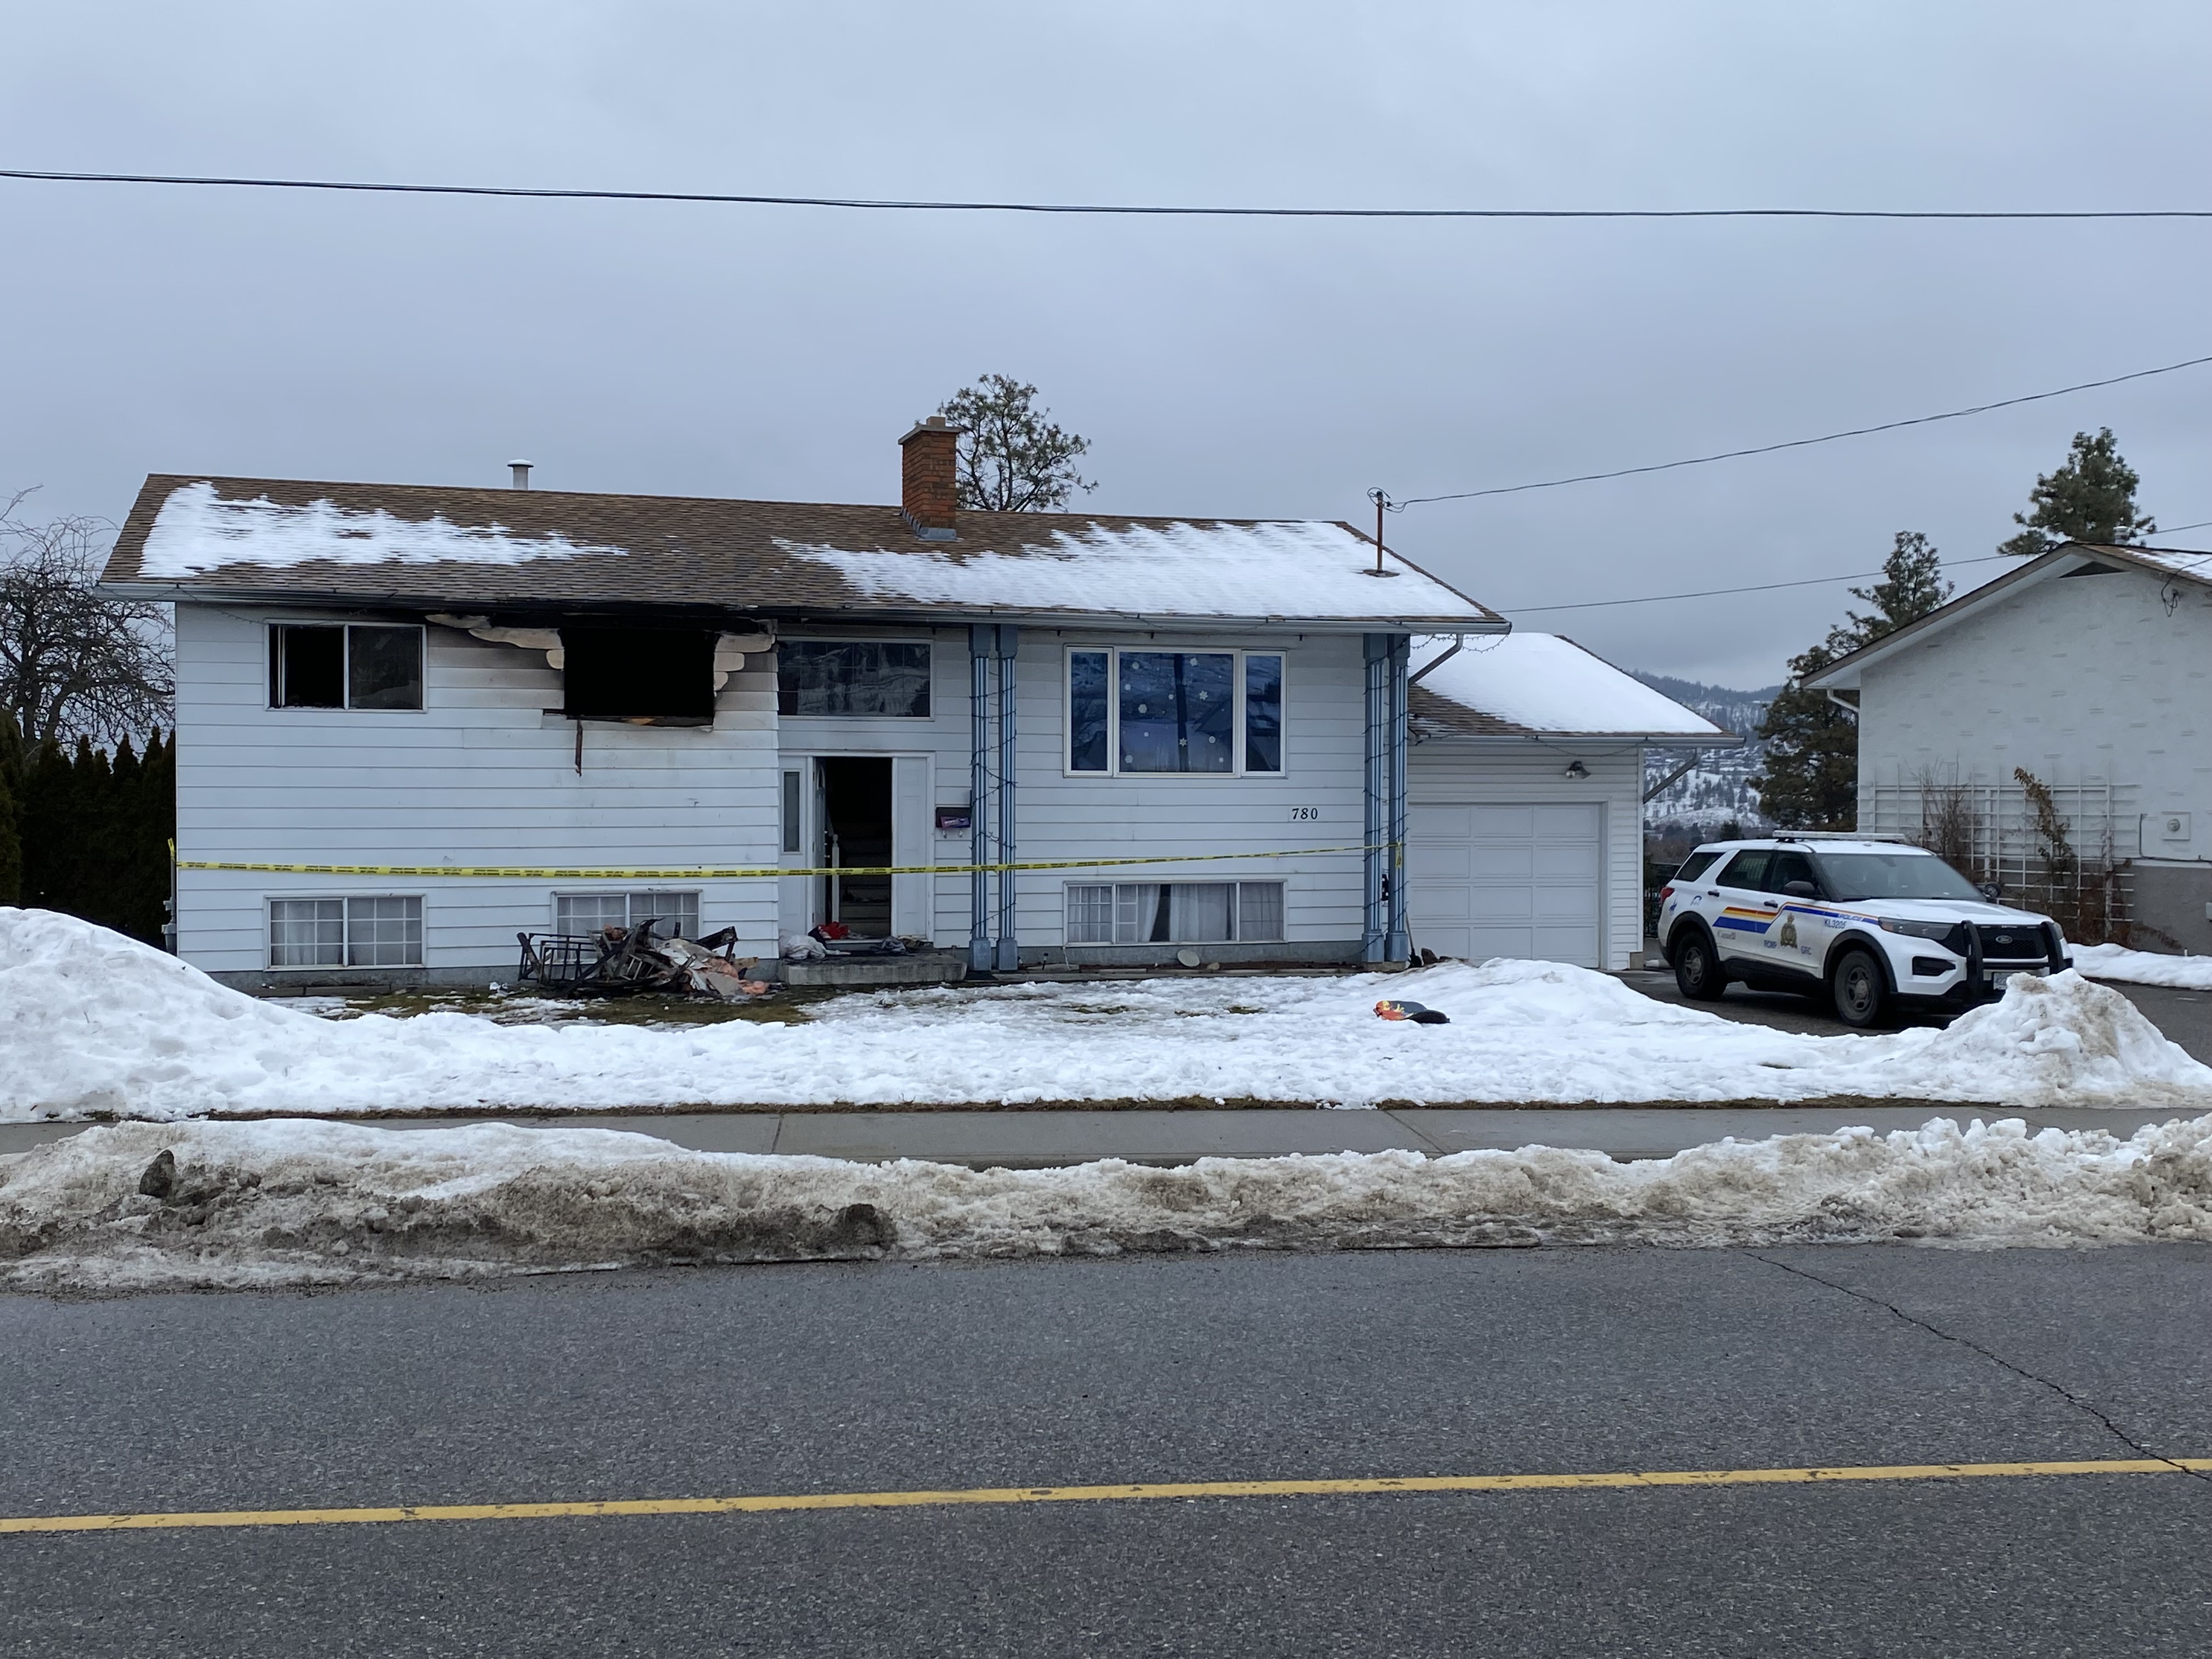 Morning house fire in Kelowna, B.C. deemed suspicious